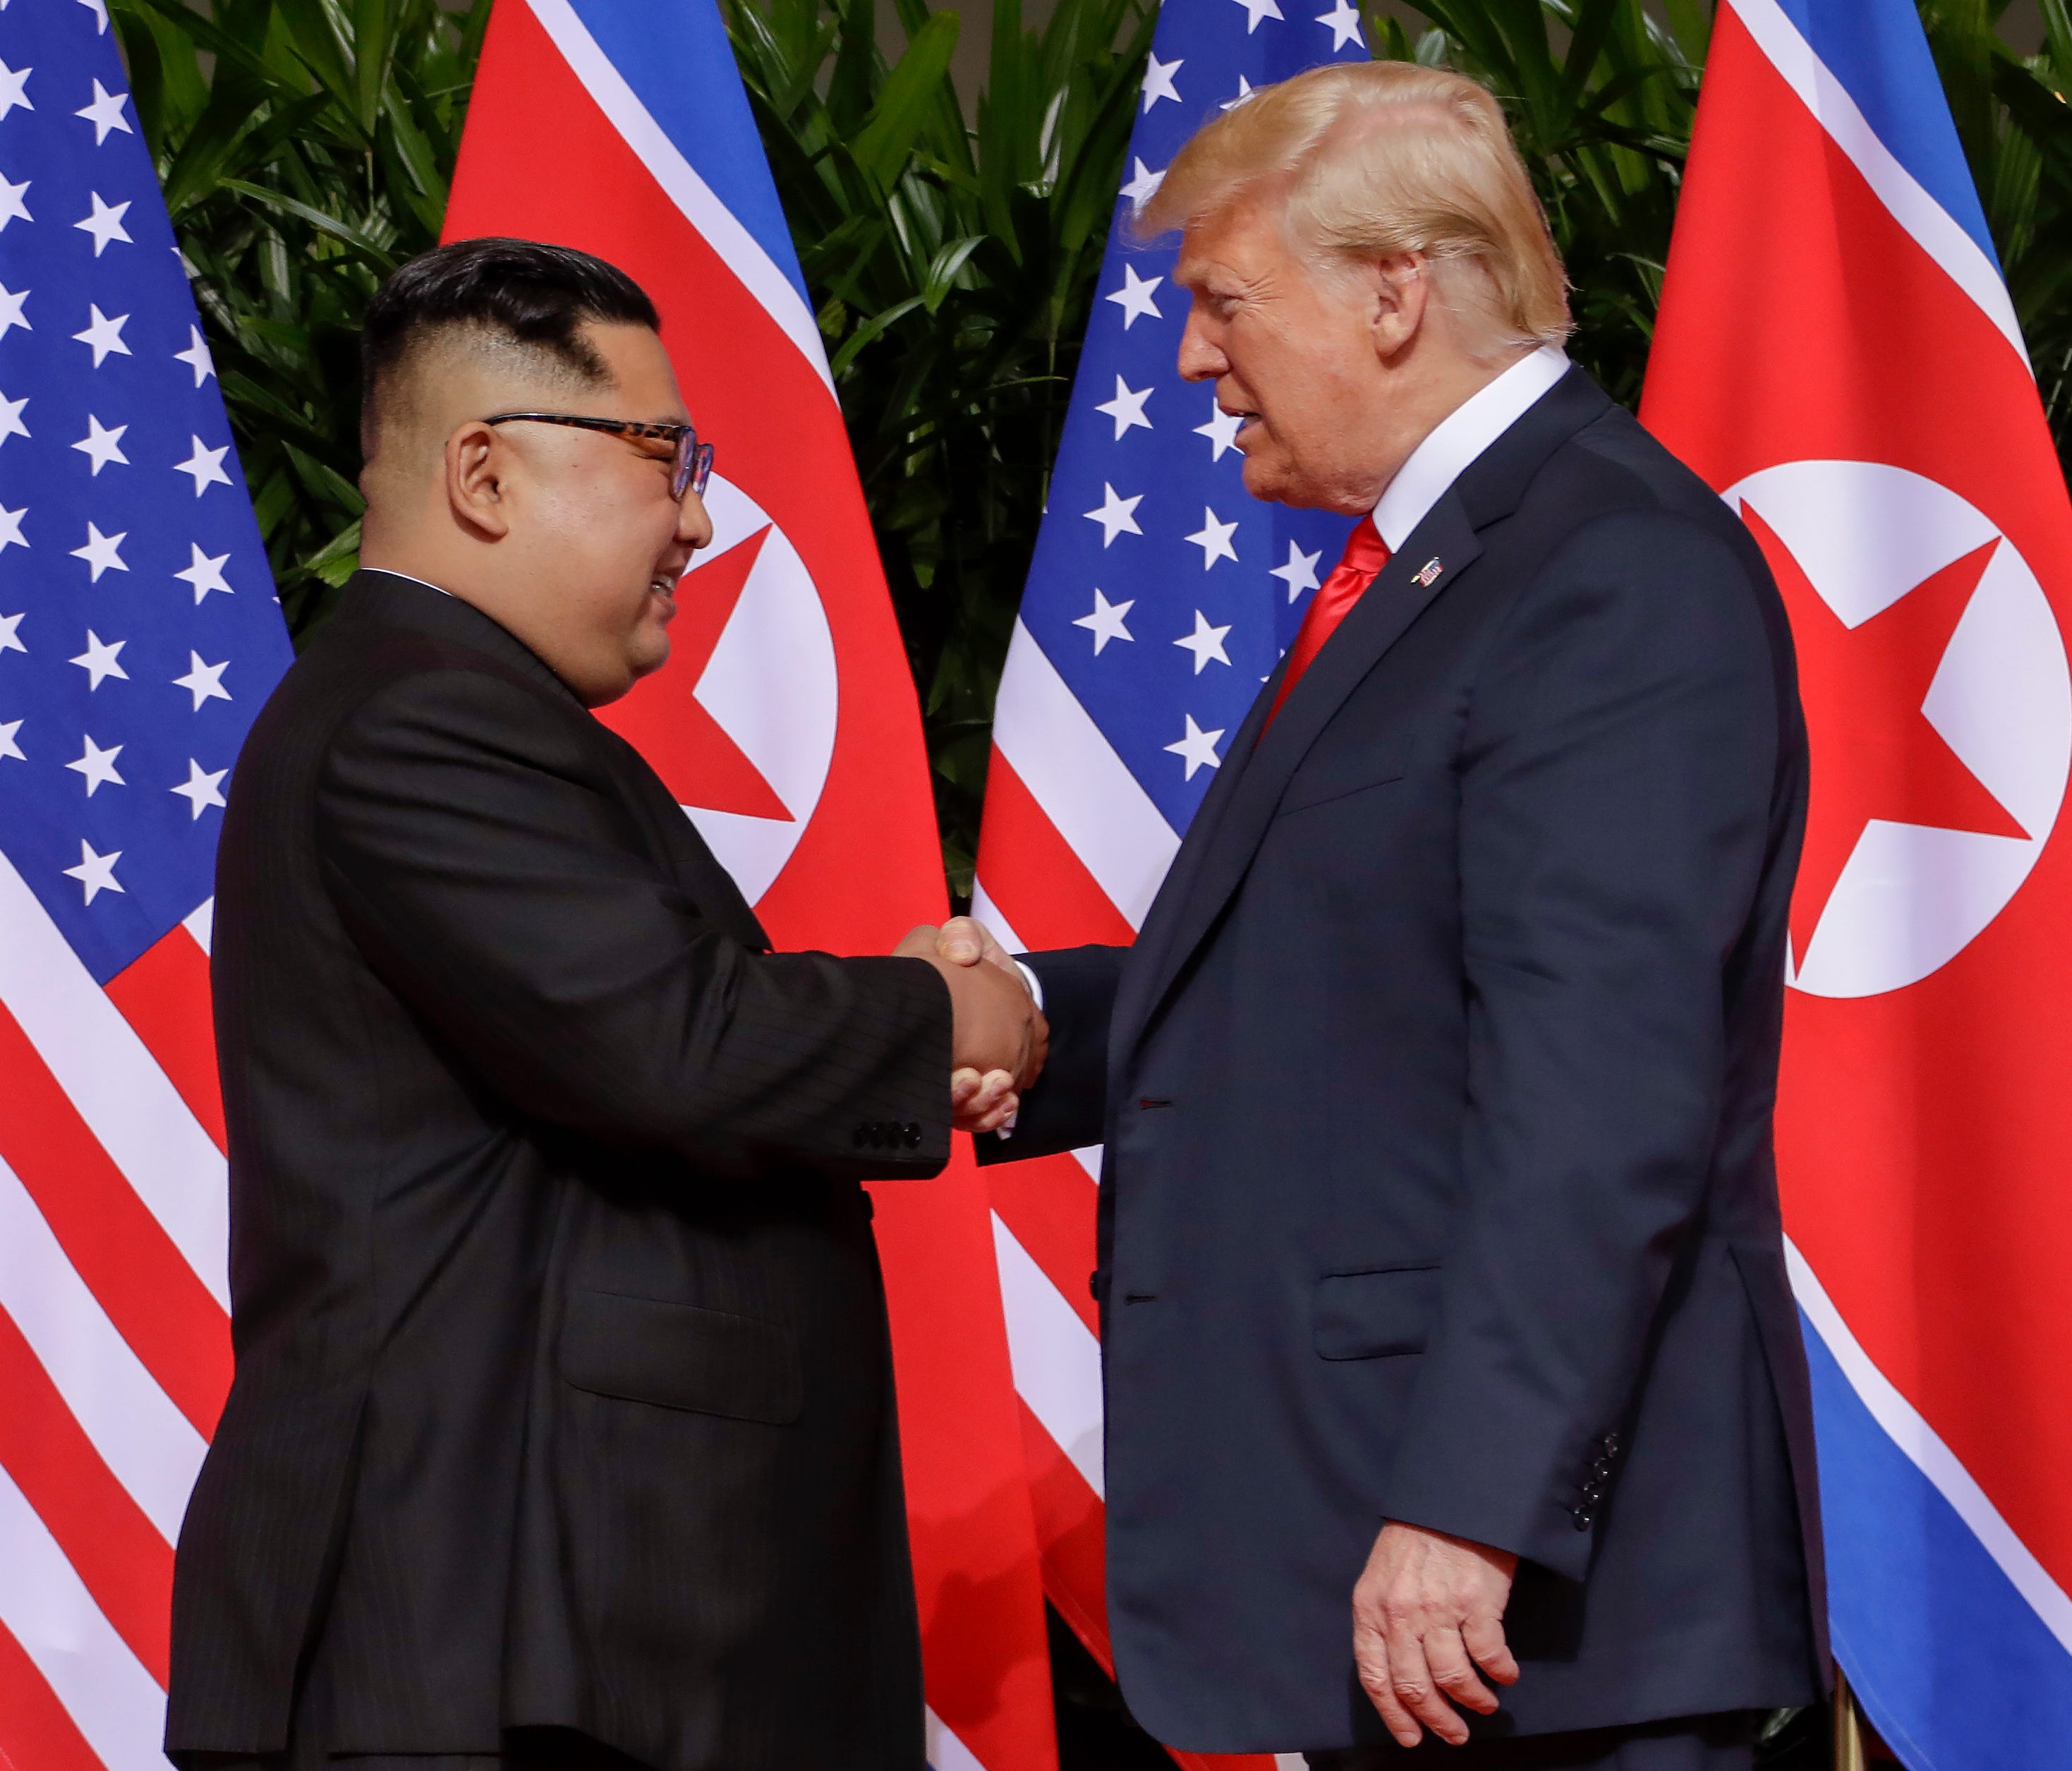 President Trump shakes hands with North Korea leader Kim Jong Un at the Capella resort on Sentosa Island in Singapore.